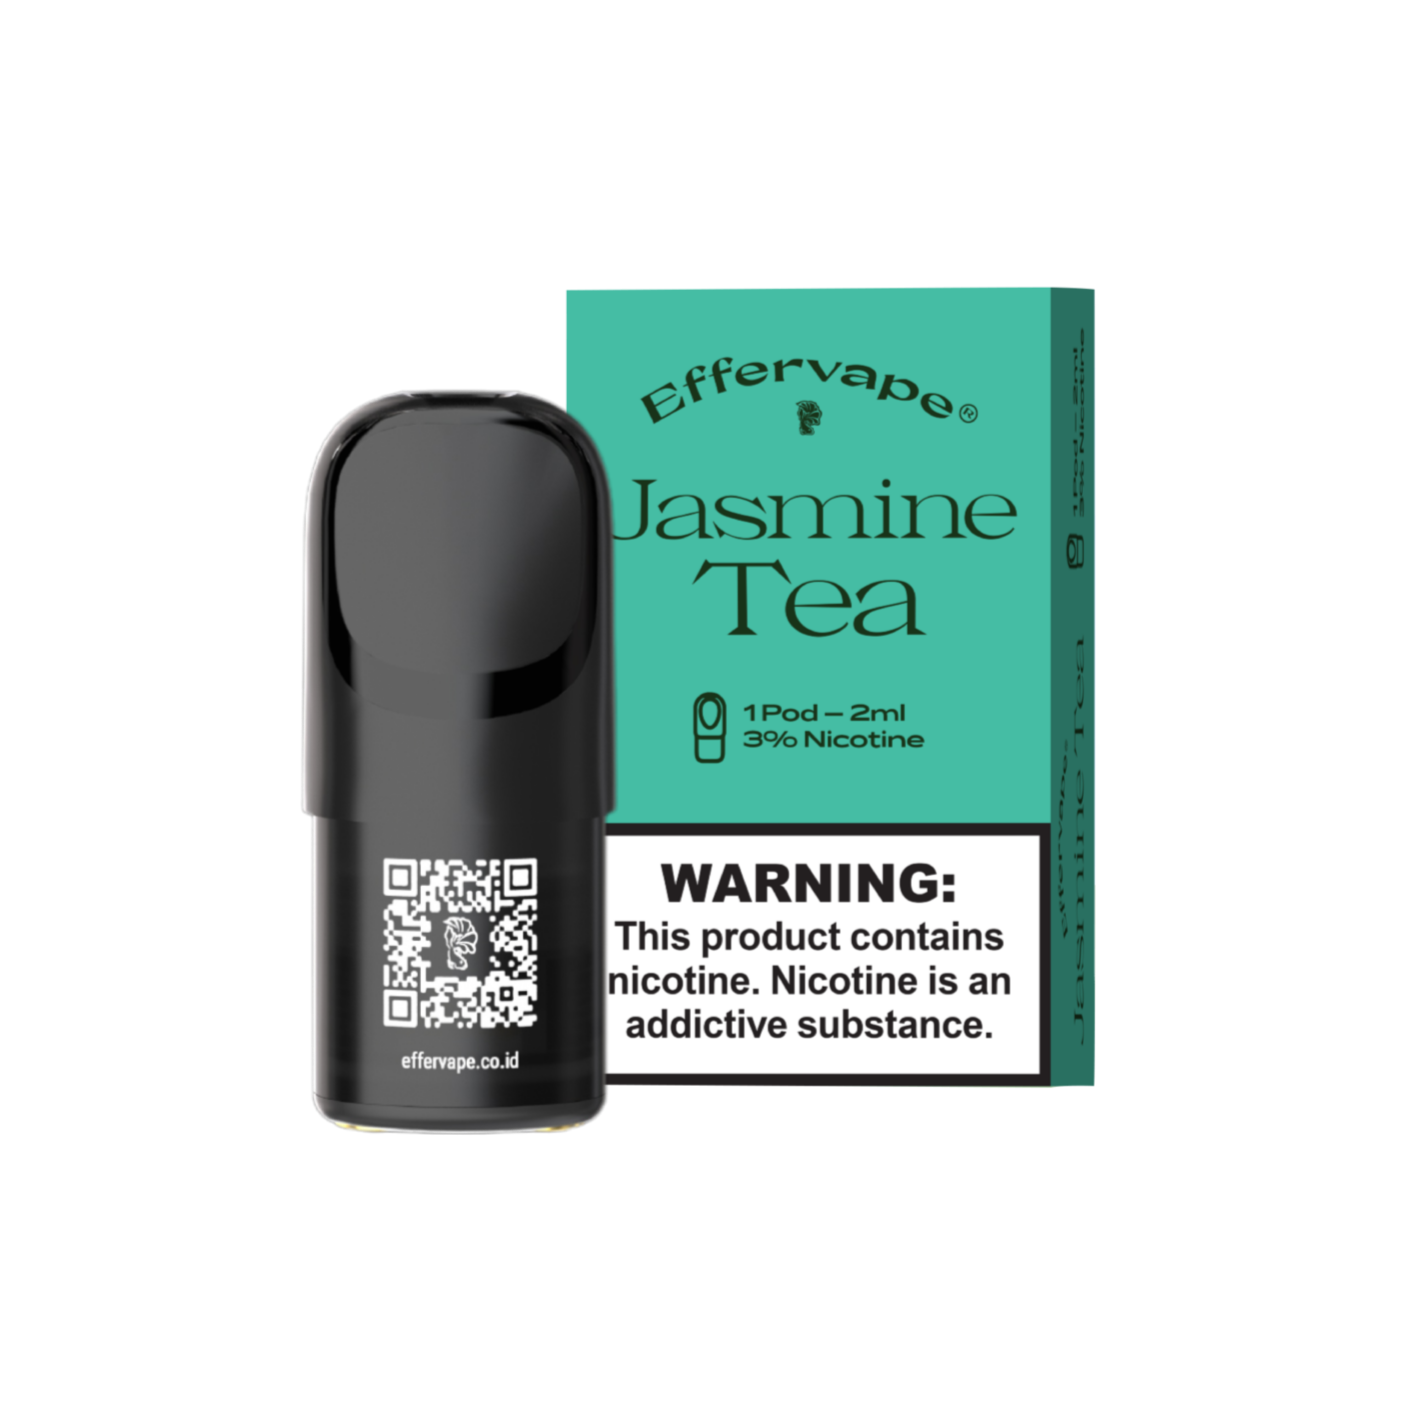 Effervape Jasmine Tea Pod Flavour, 3% Nicotine - 2ml